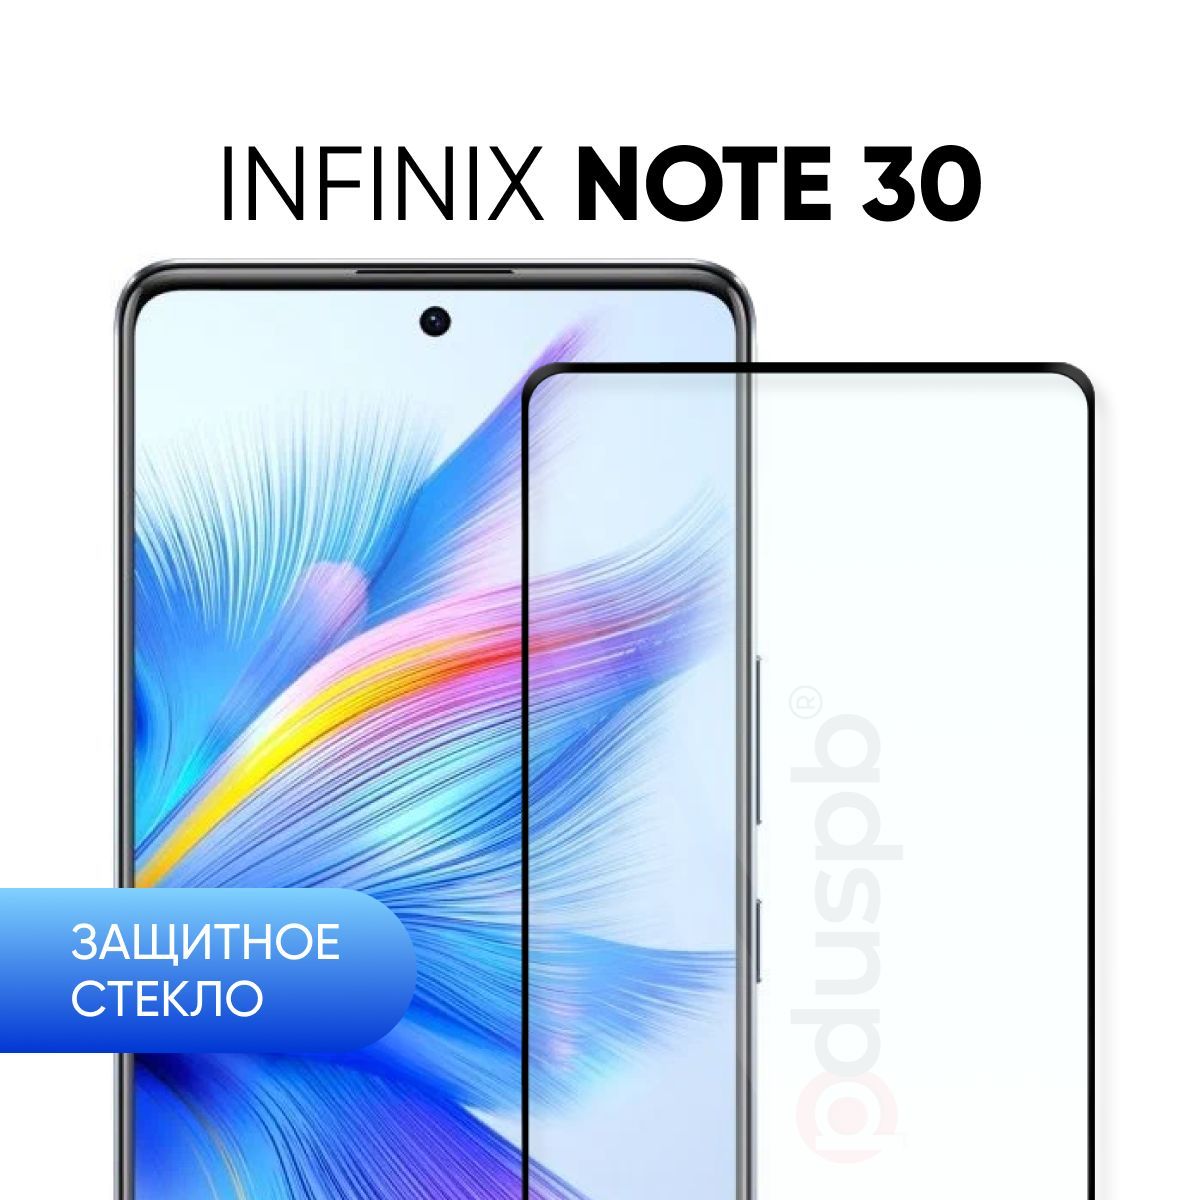 Infinix note 30 4. Инфиникс ноут 30. Infinix Note 30 защитное стекло. Infinix Note 30 дисплей. Смартфон Infinix Note 30i.